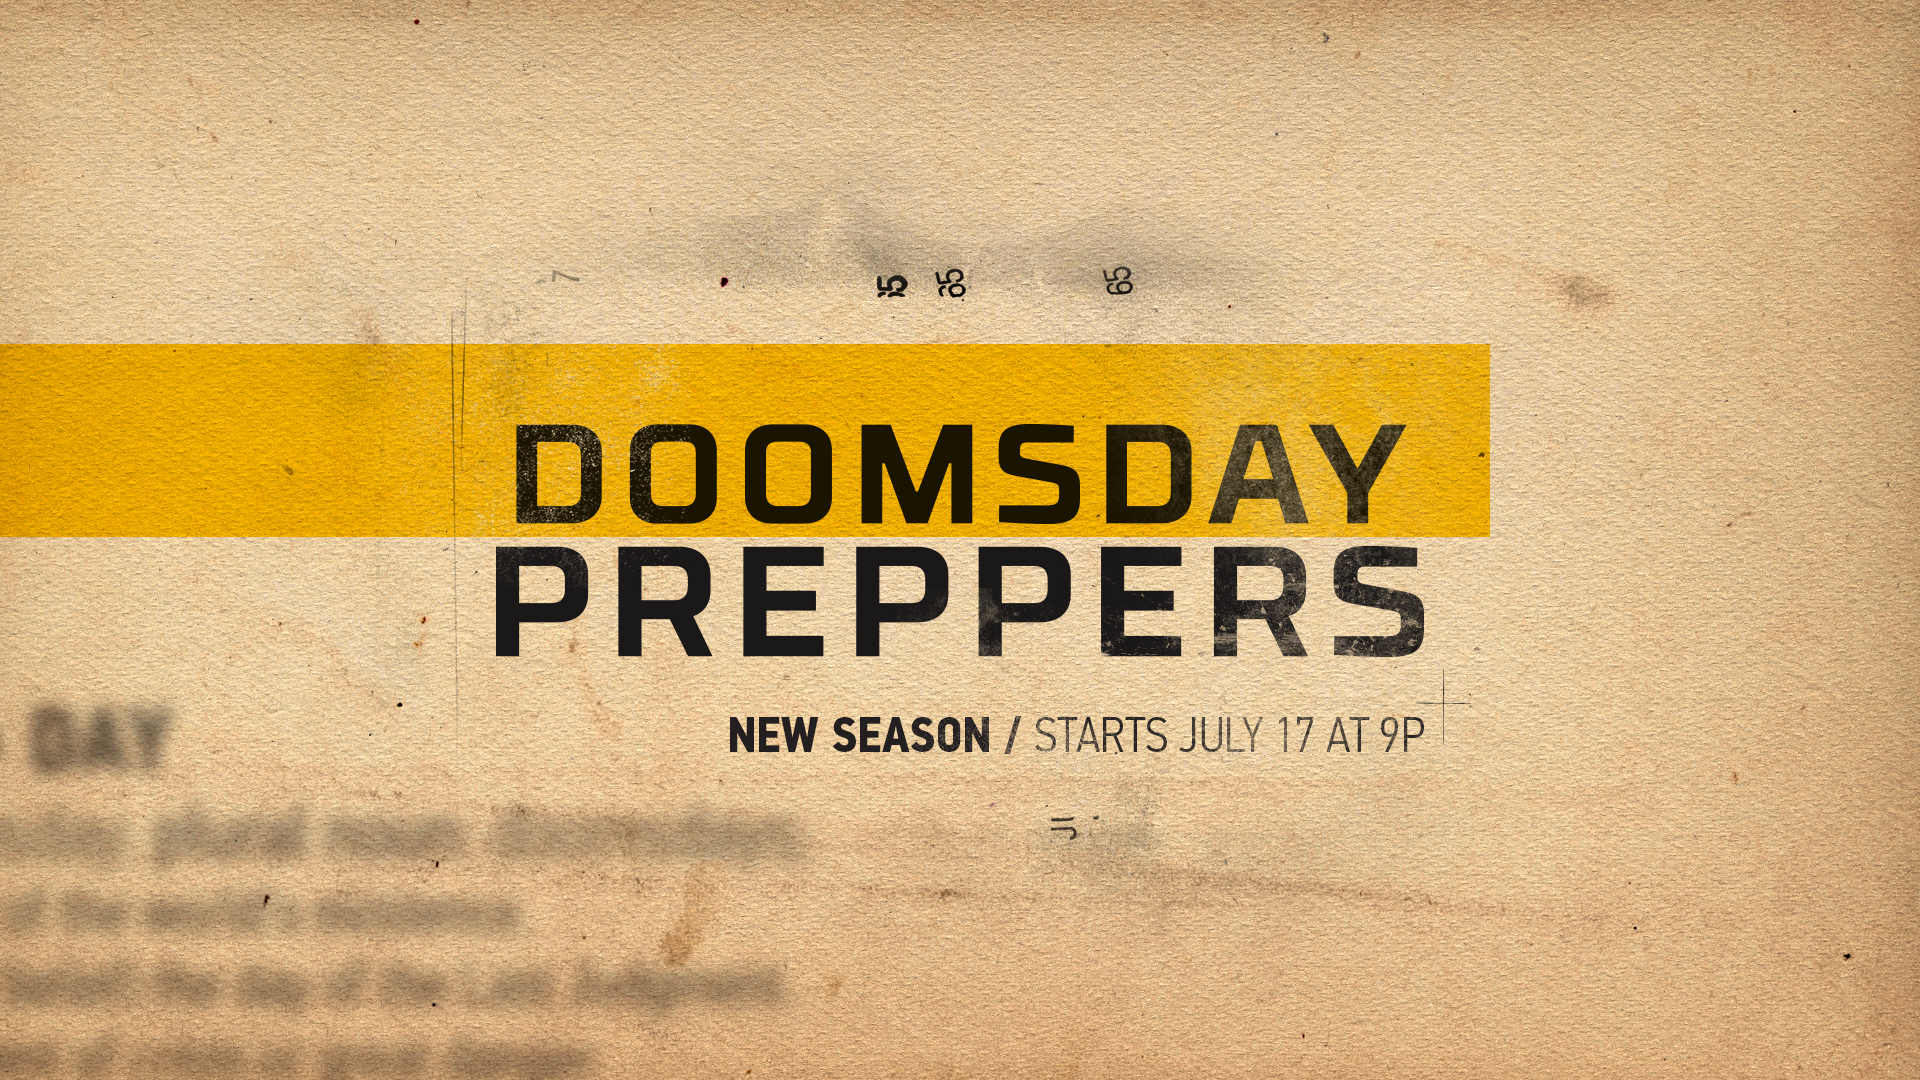 National Geographic: Doomsday Preppers Design Frames